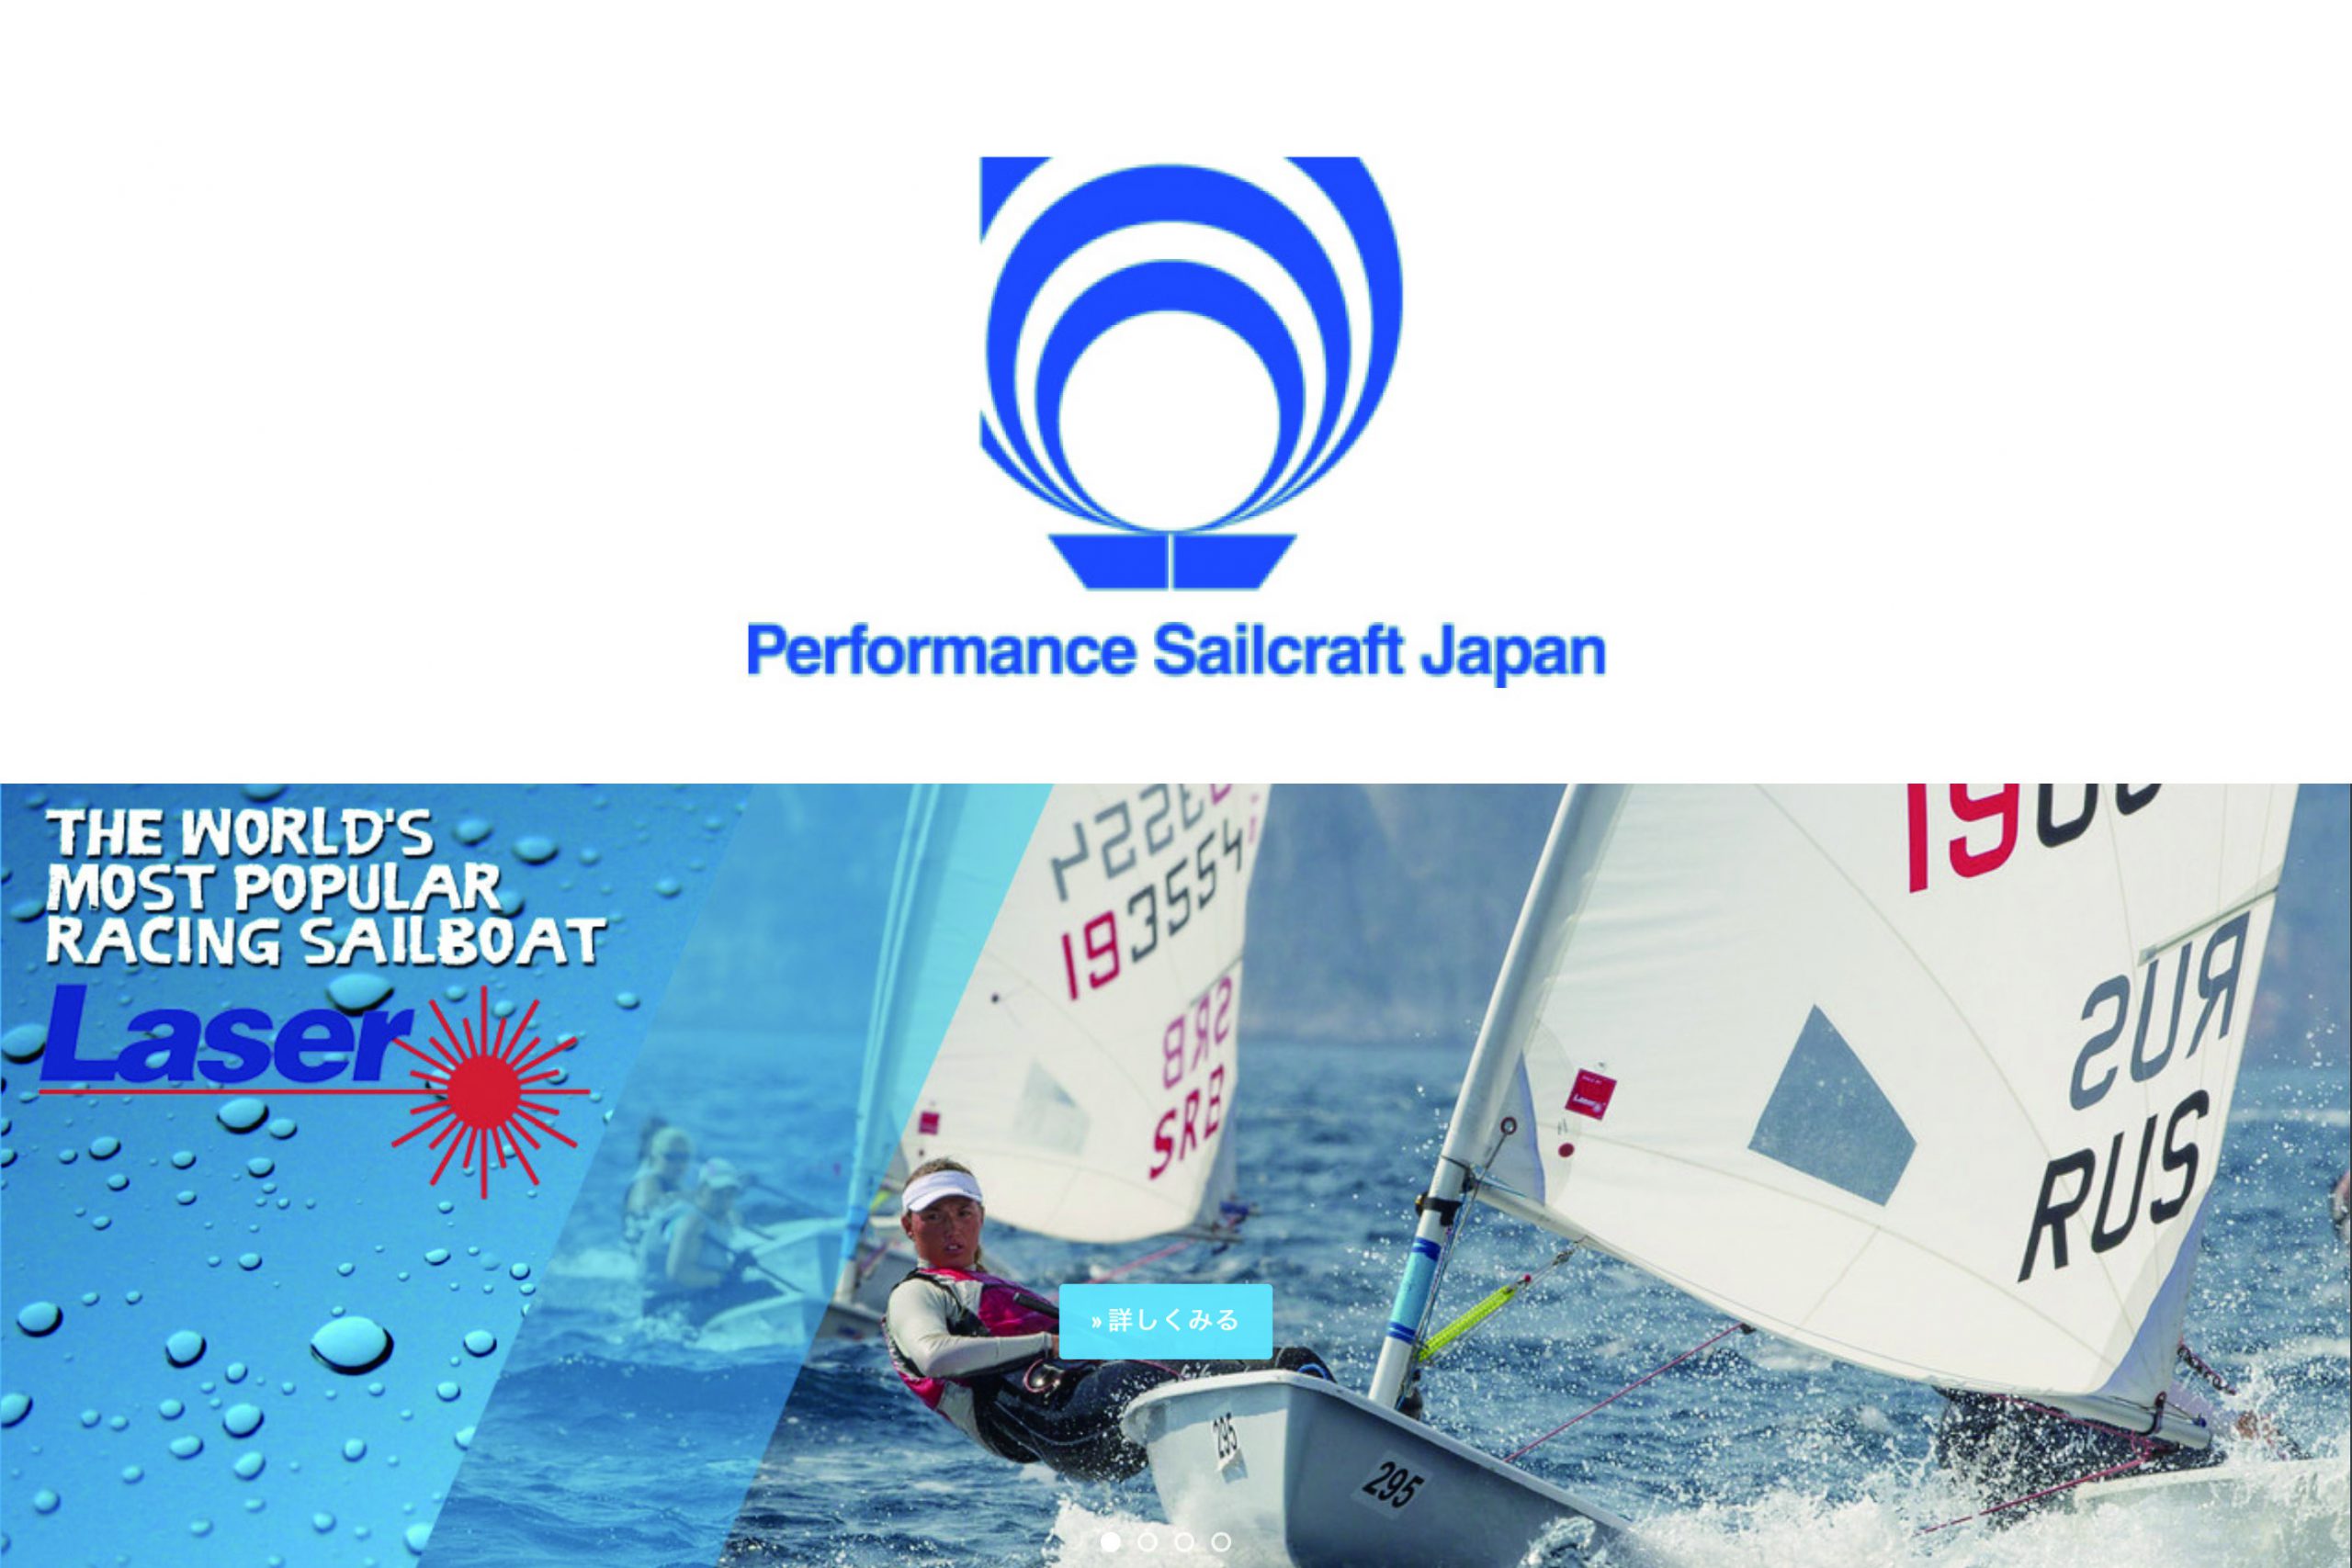 Performance Sailcraft Japan